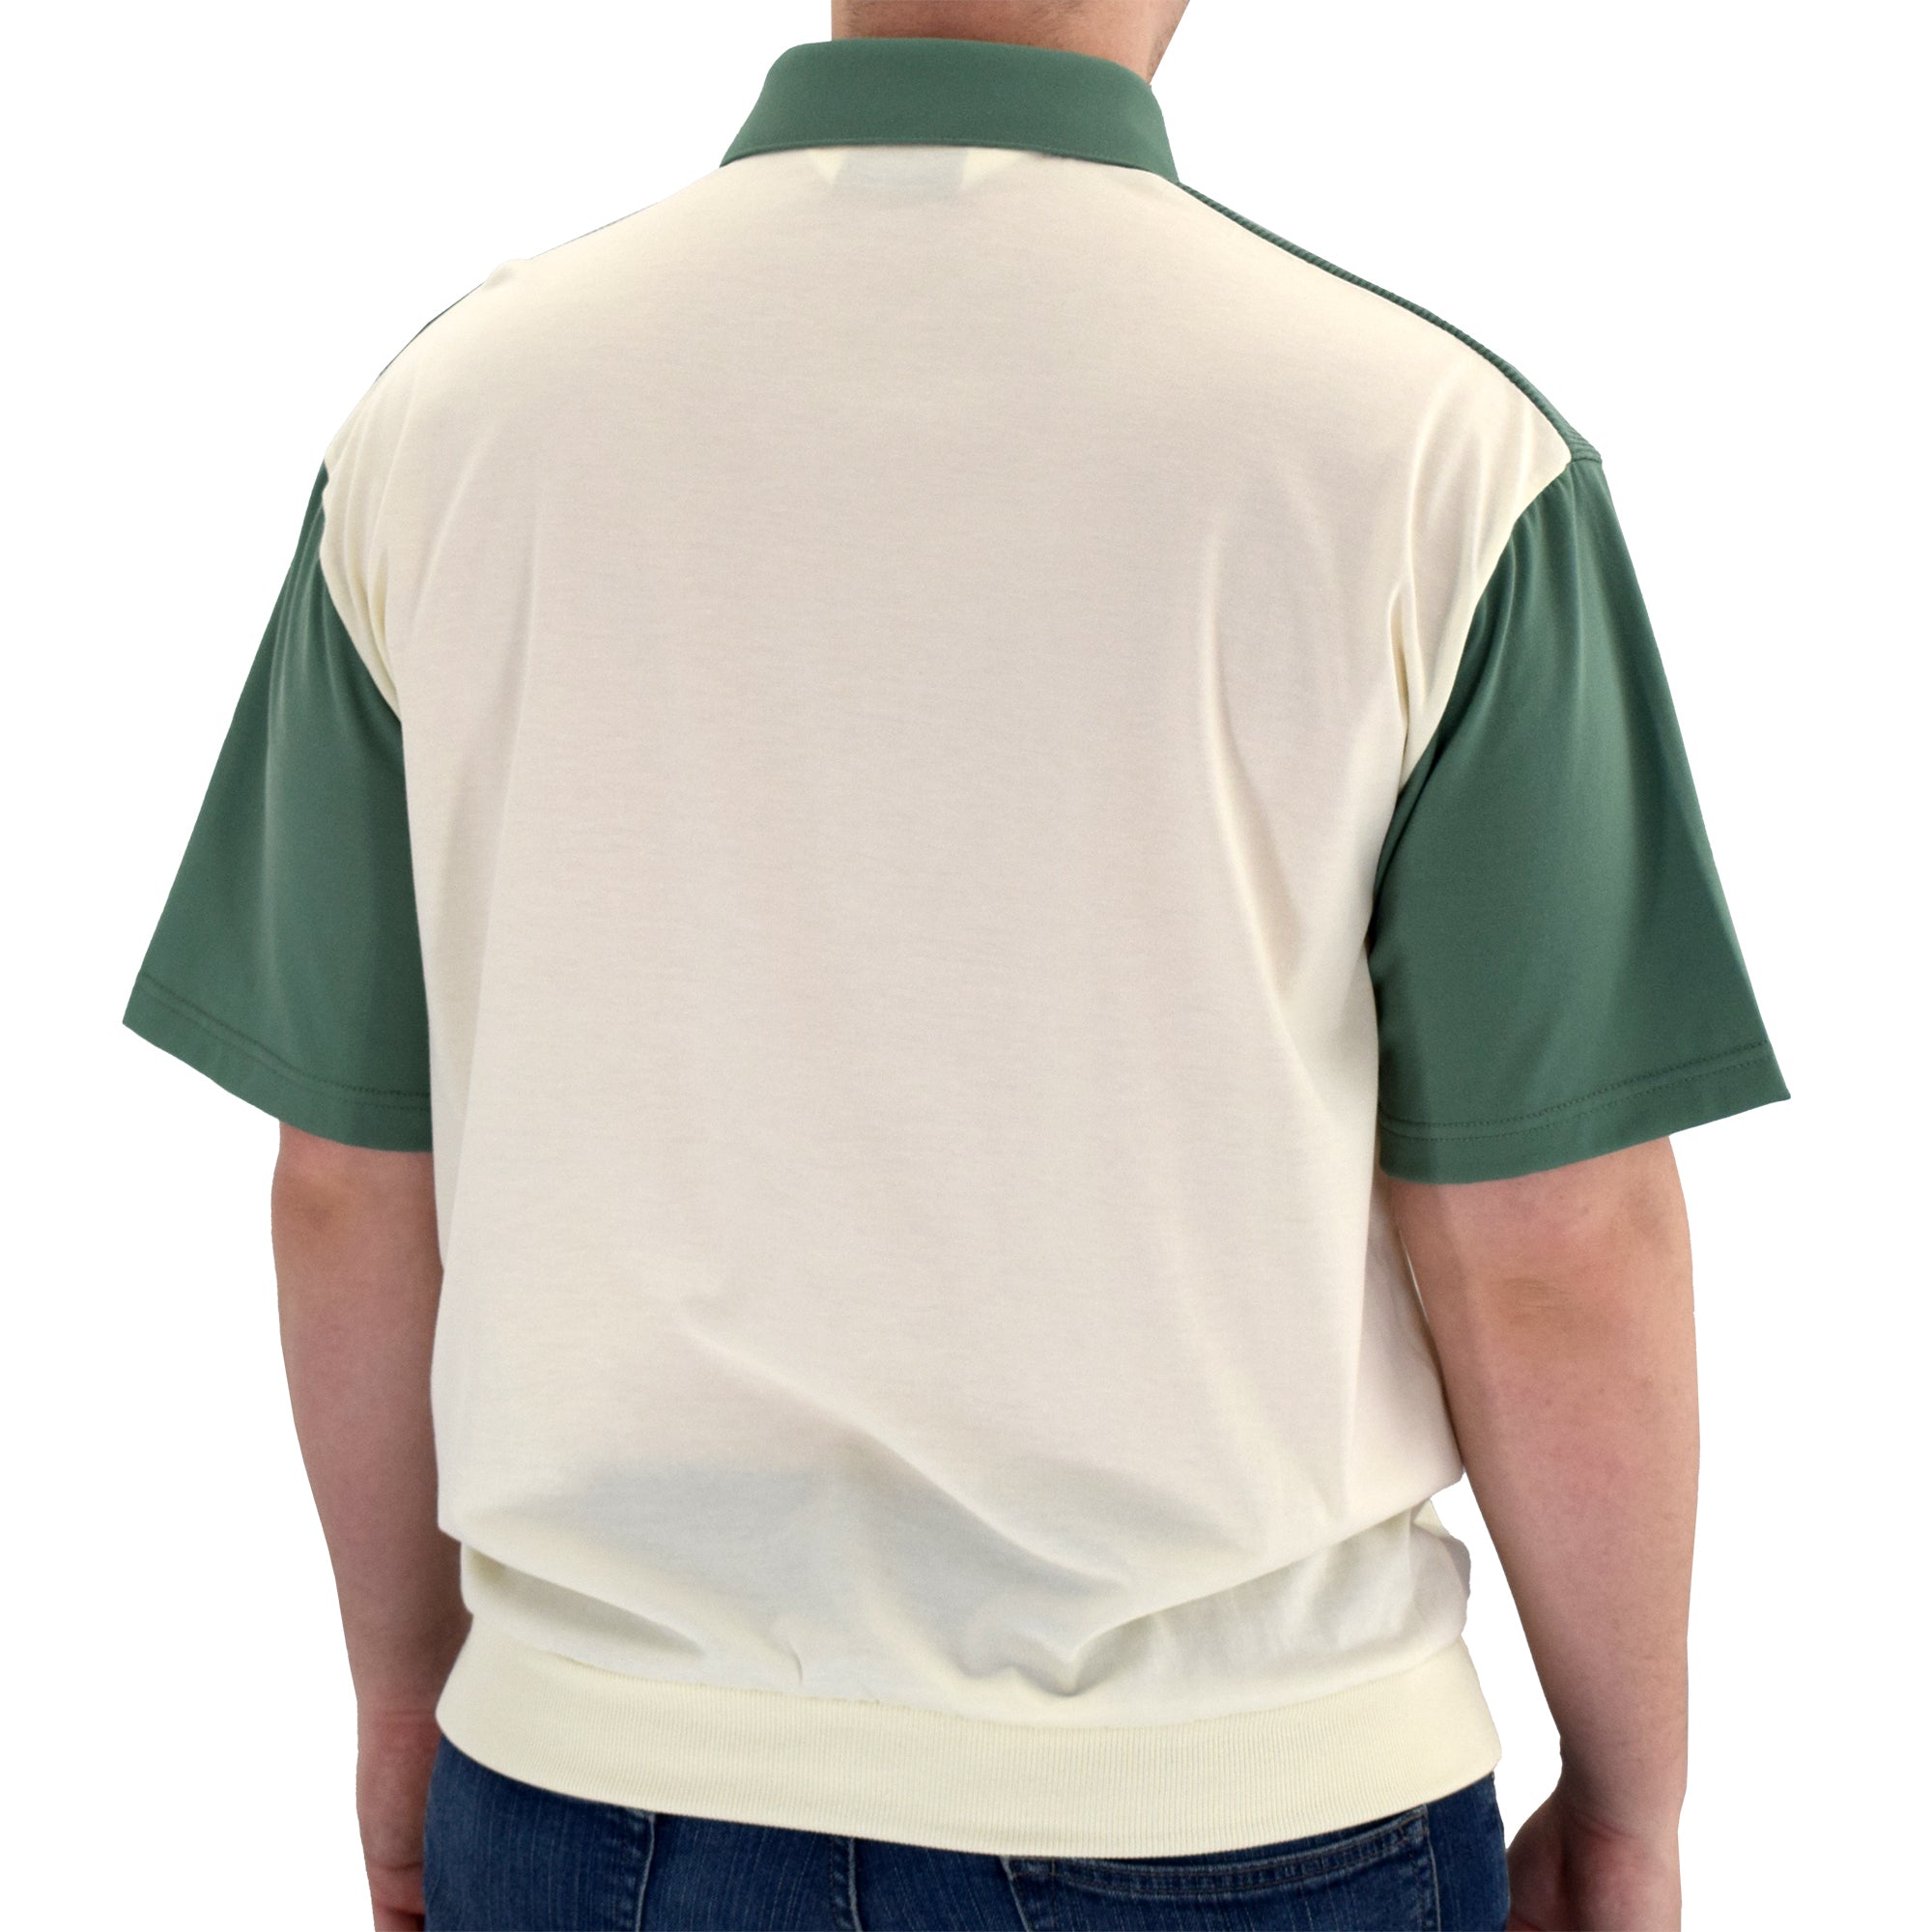 Classics By Palmland Knit Banded Bottom Shirt - 6010-120 Sage - bandedbottom